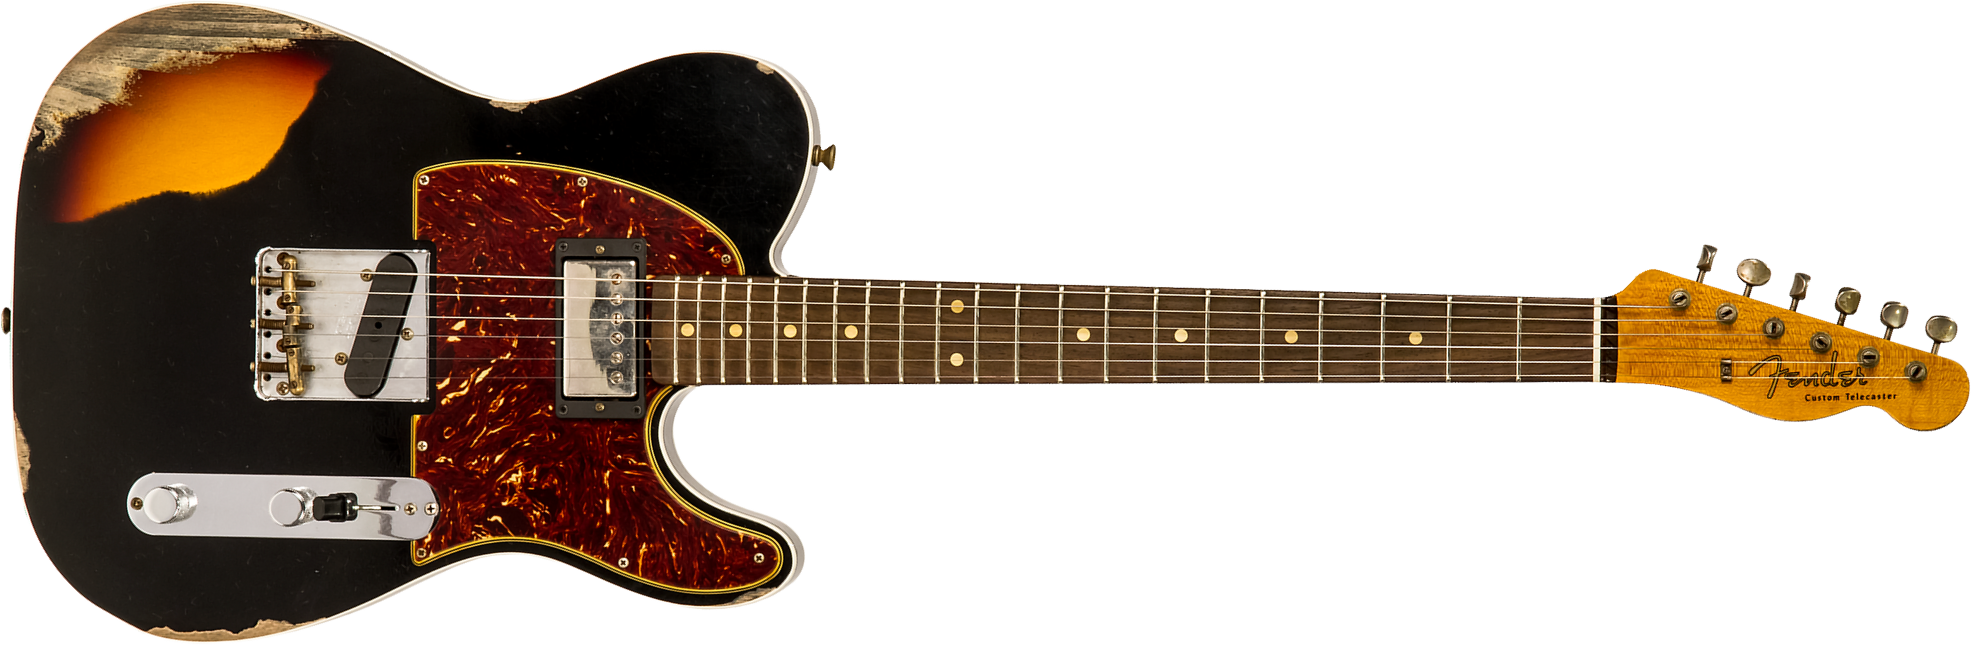 Fender Custom Shop Tele Custom 1960 Sh Ltd Hs Ht Rw #cz549784 - Heavy Relic Black Over 3-color Sunburst - E-Gitarre in Teleform - Main picture